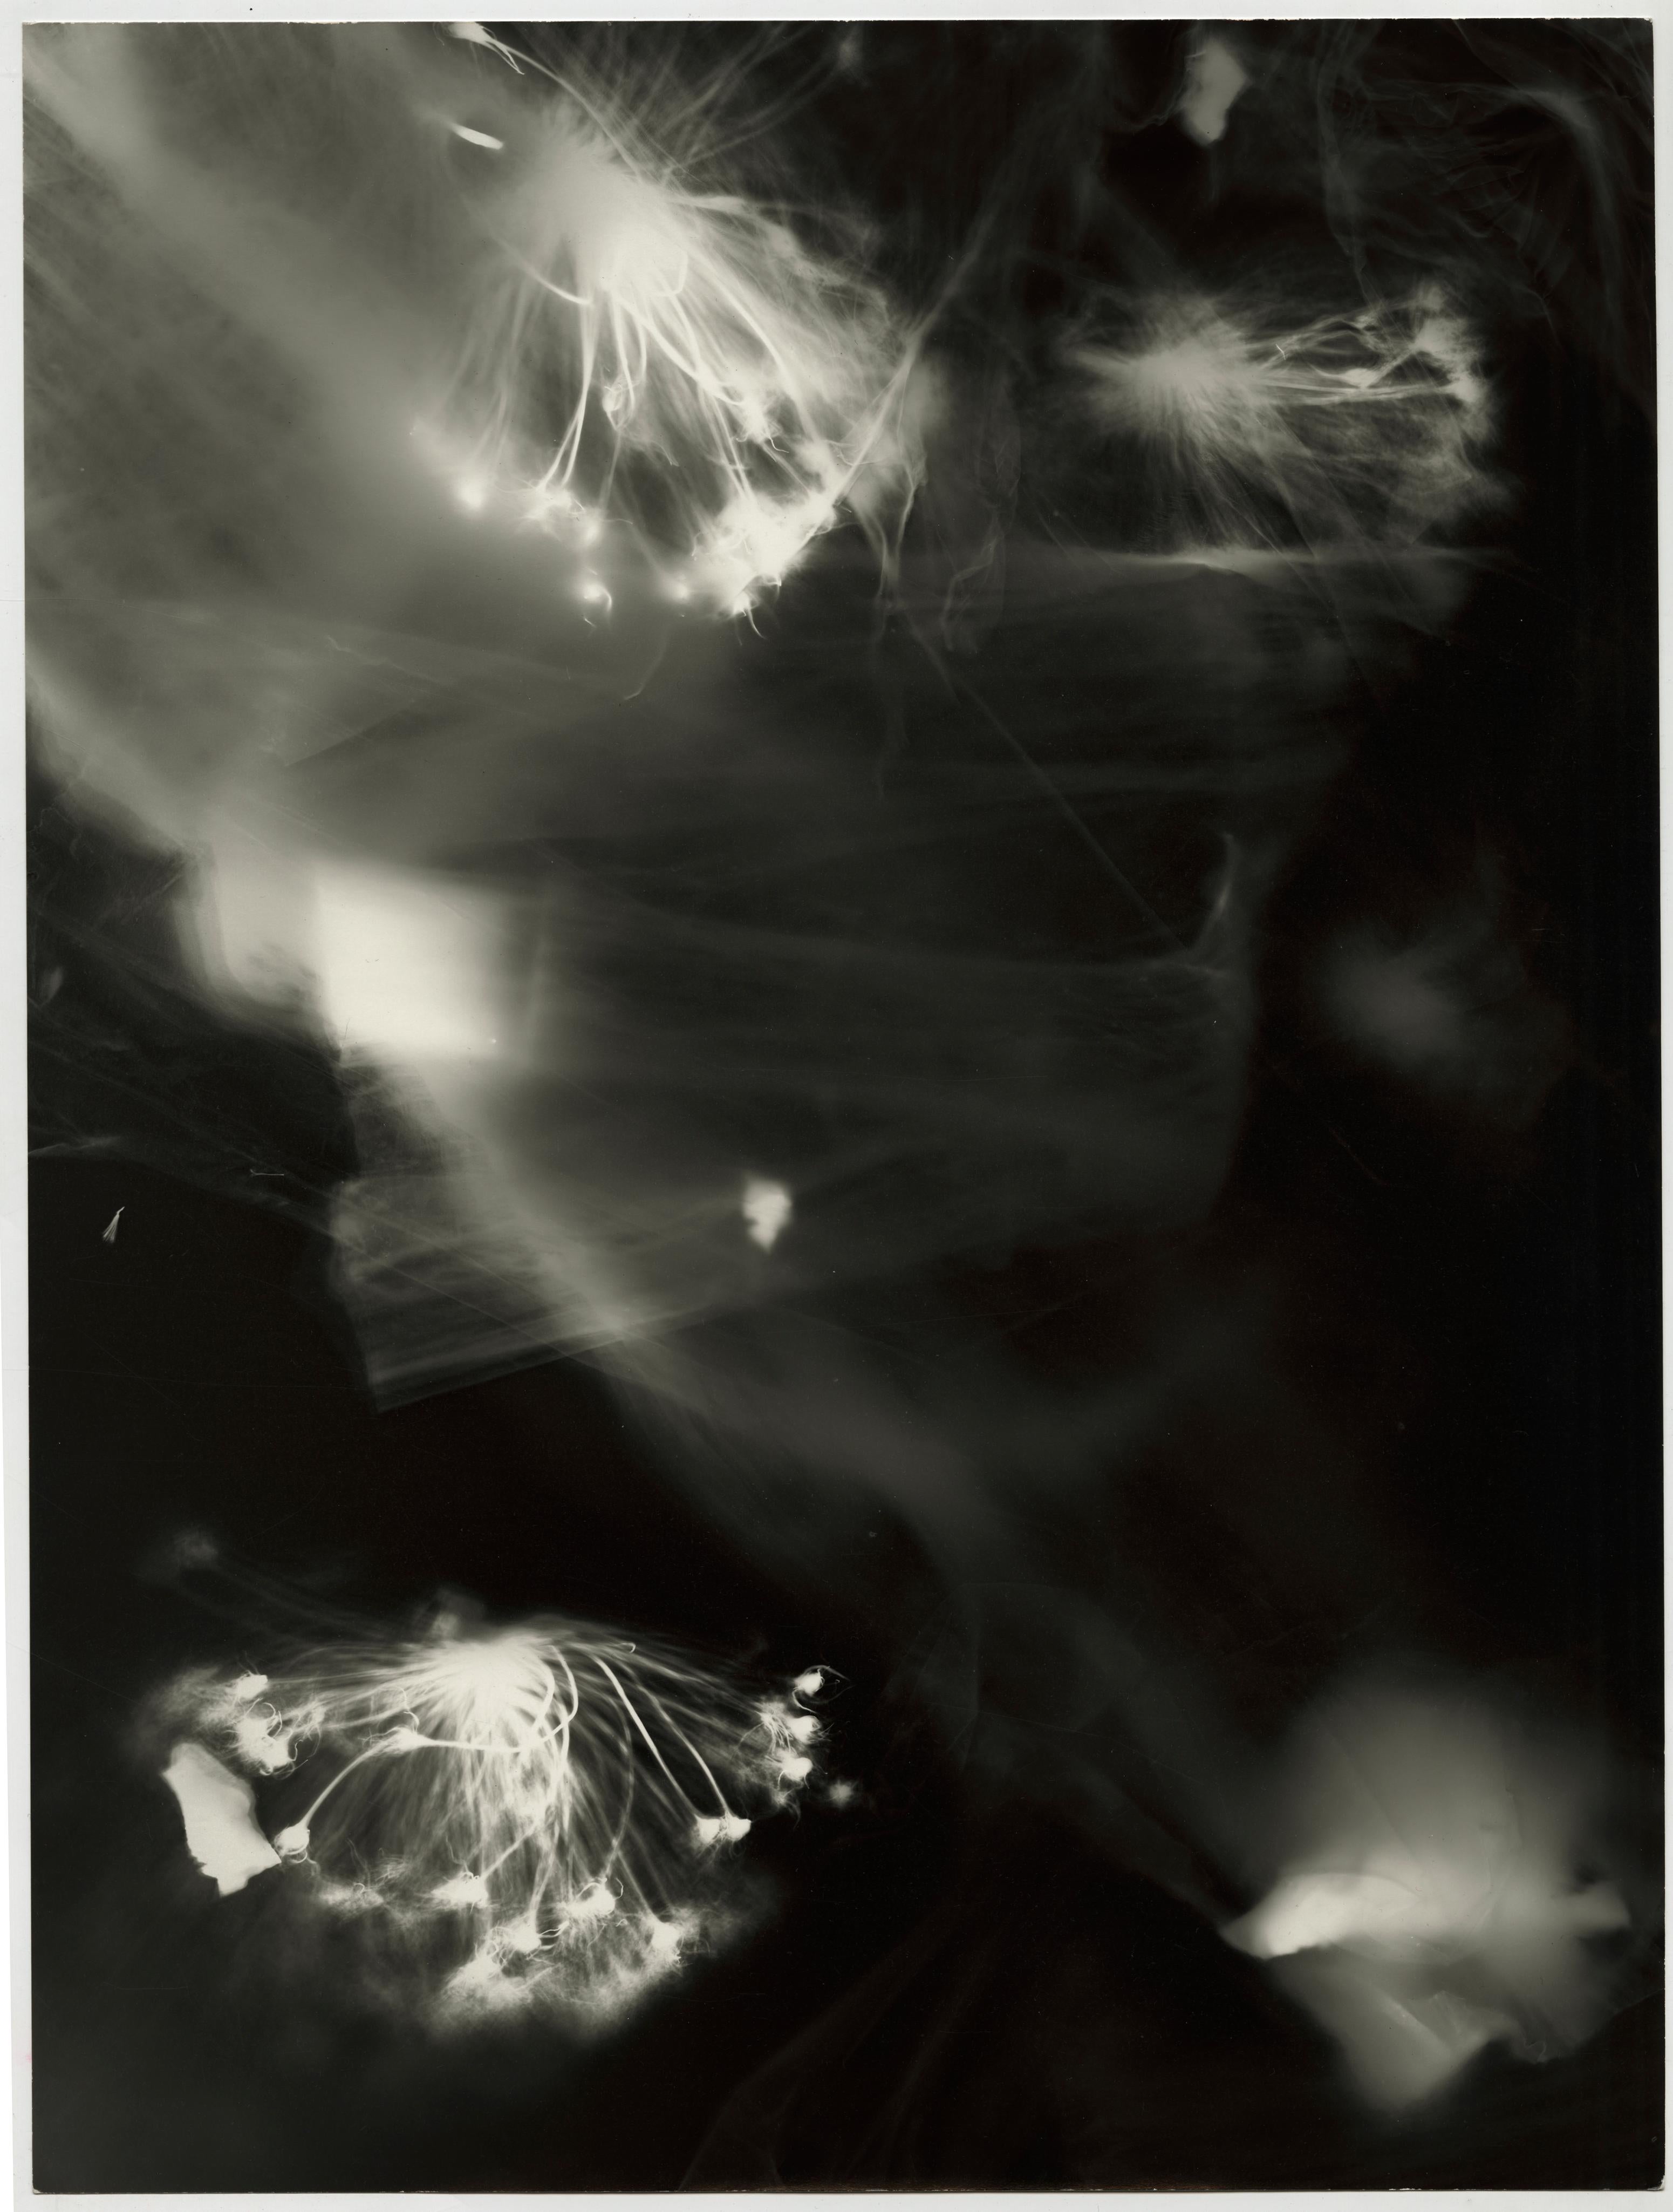 Embrace (Whirlwind) - photographie figurative abstraite contemporaine